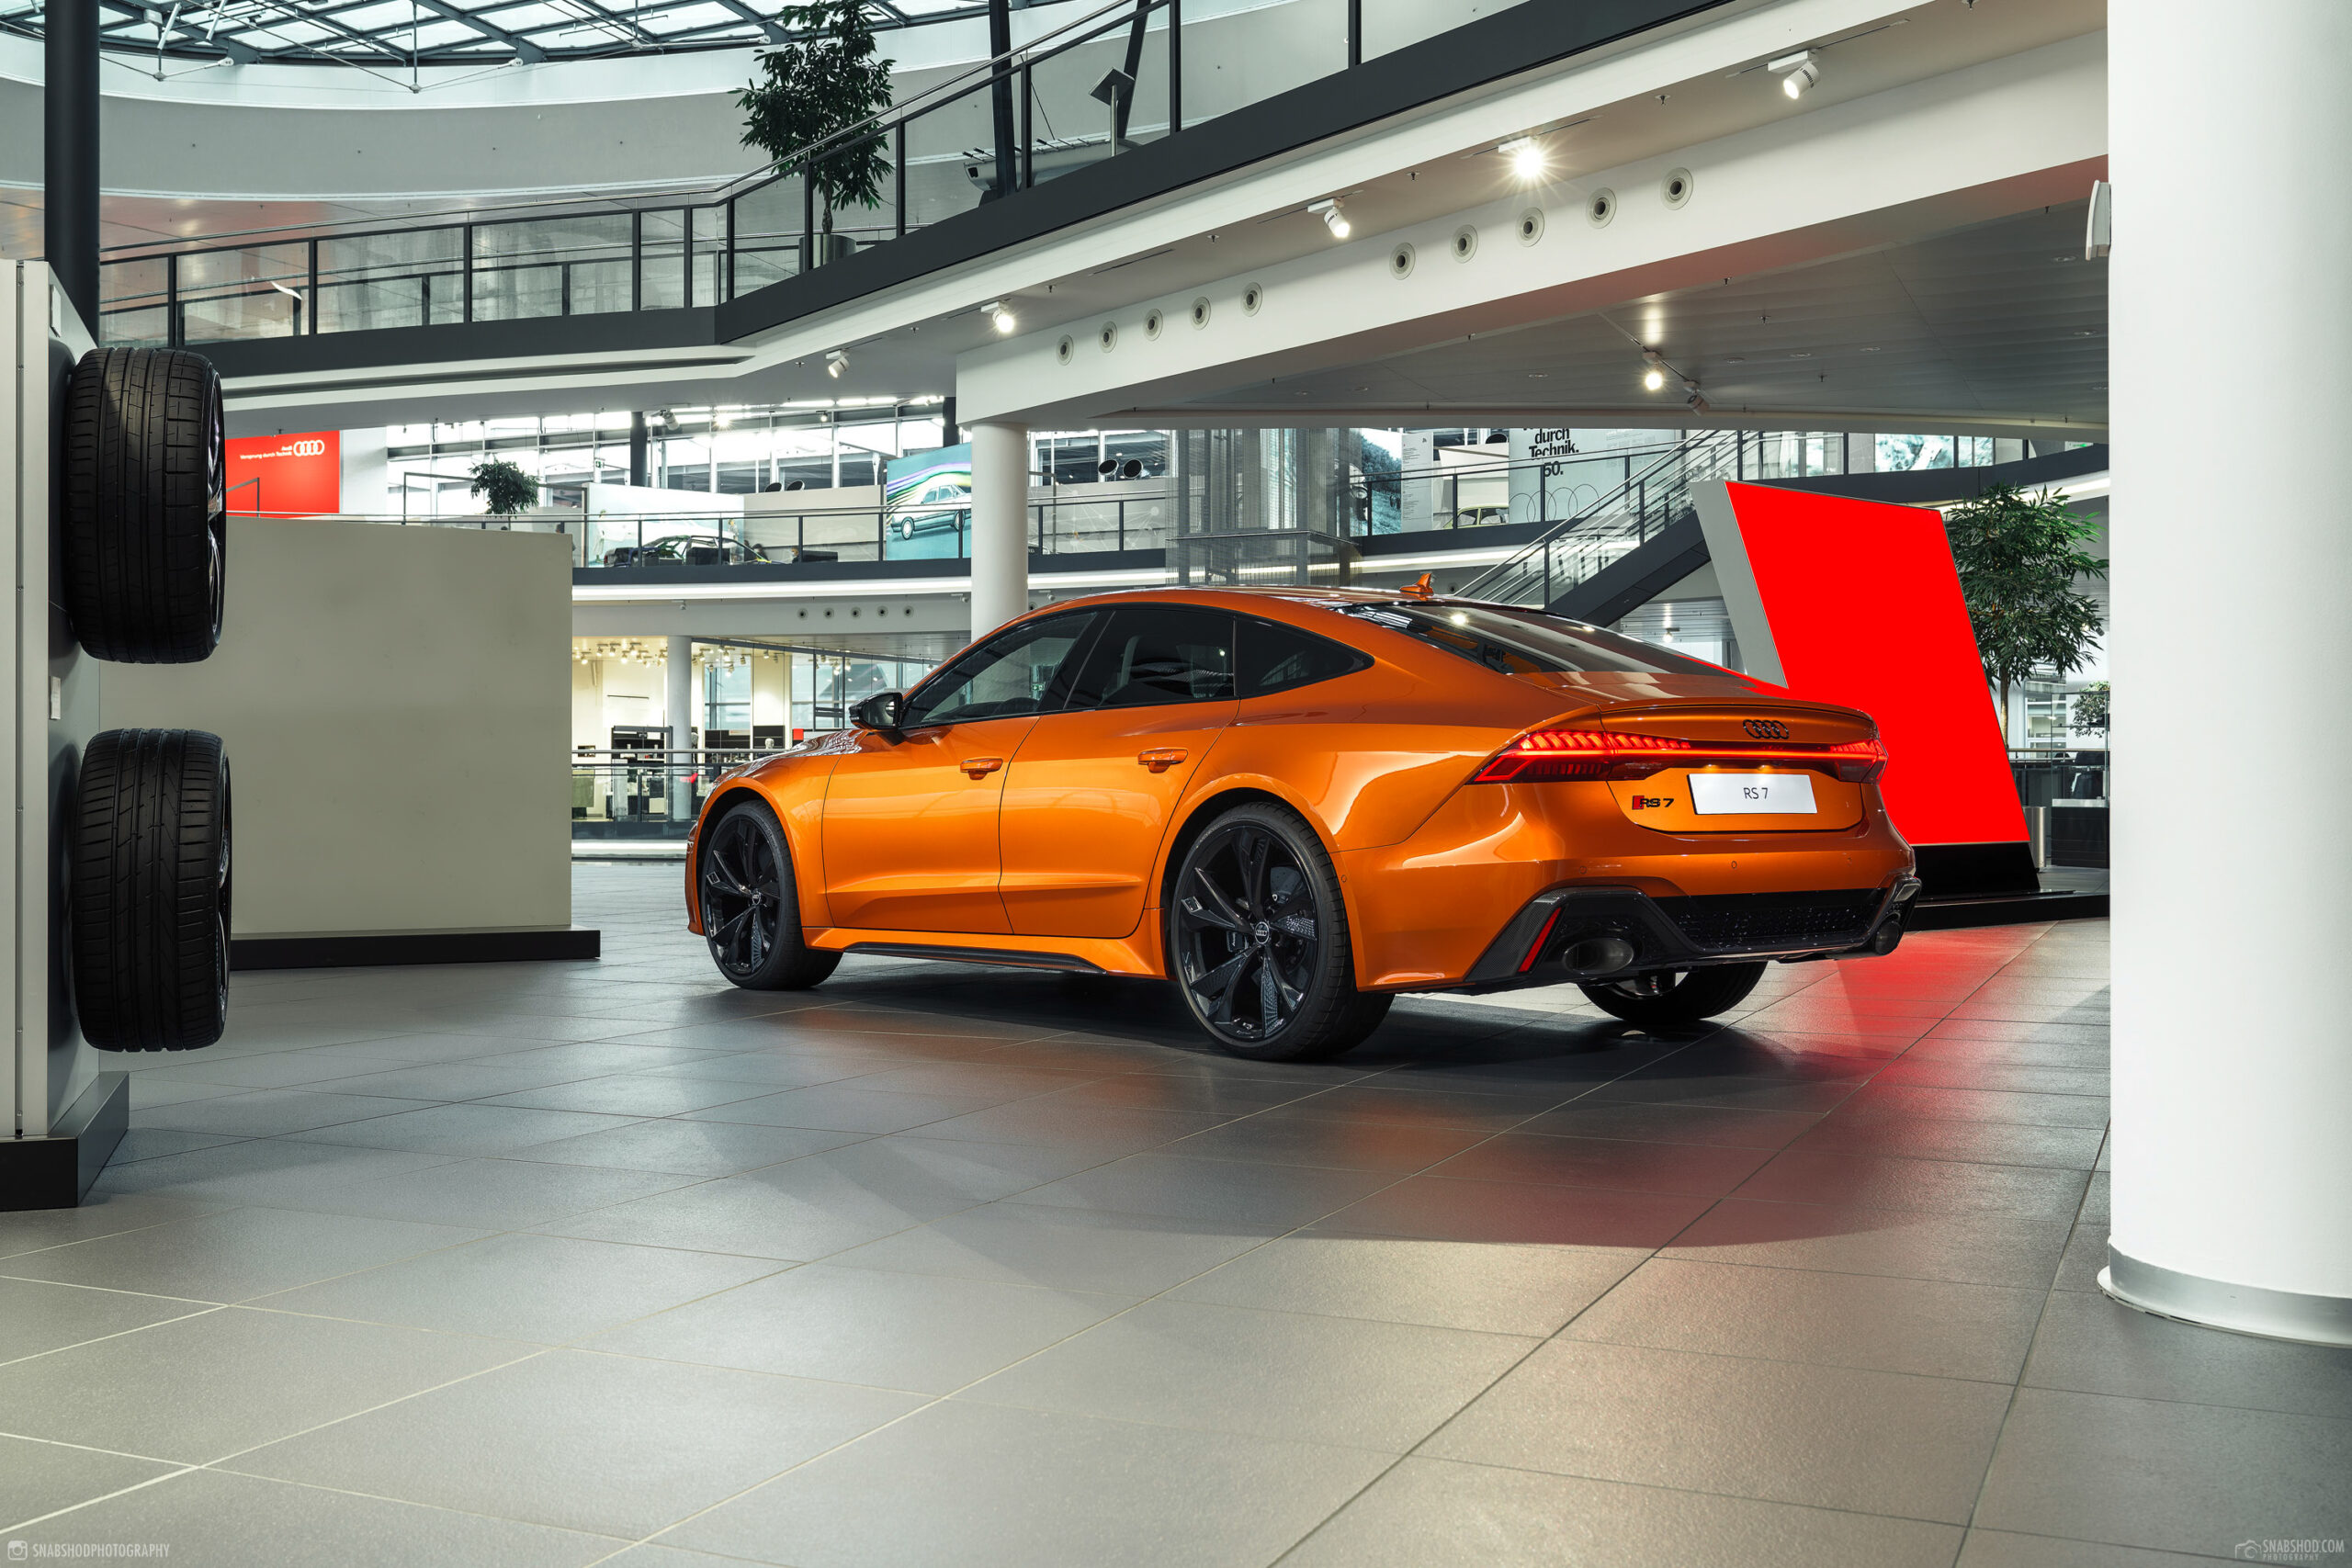 Audi RS7 Sportback orange flame